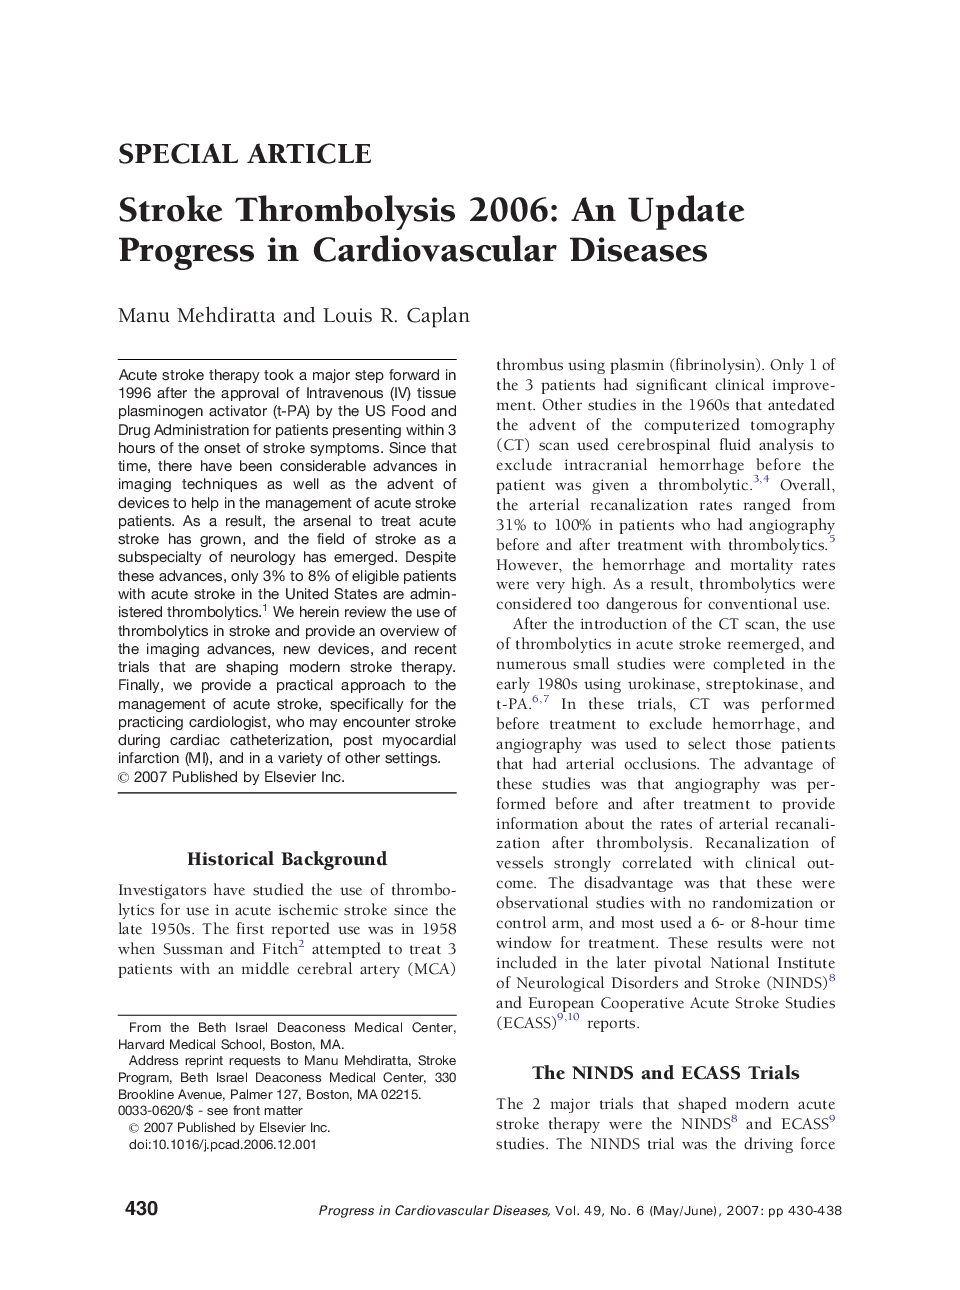 Stroke Thrombolysis 2006: An Update Progress in Cardiovascular Diseases